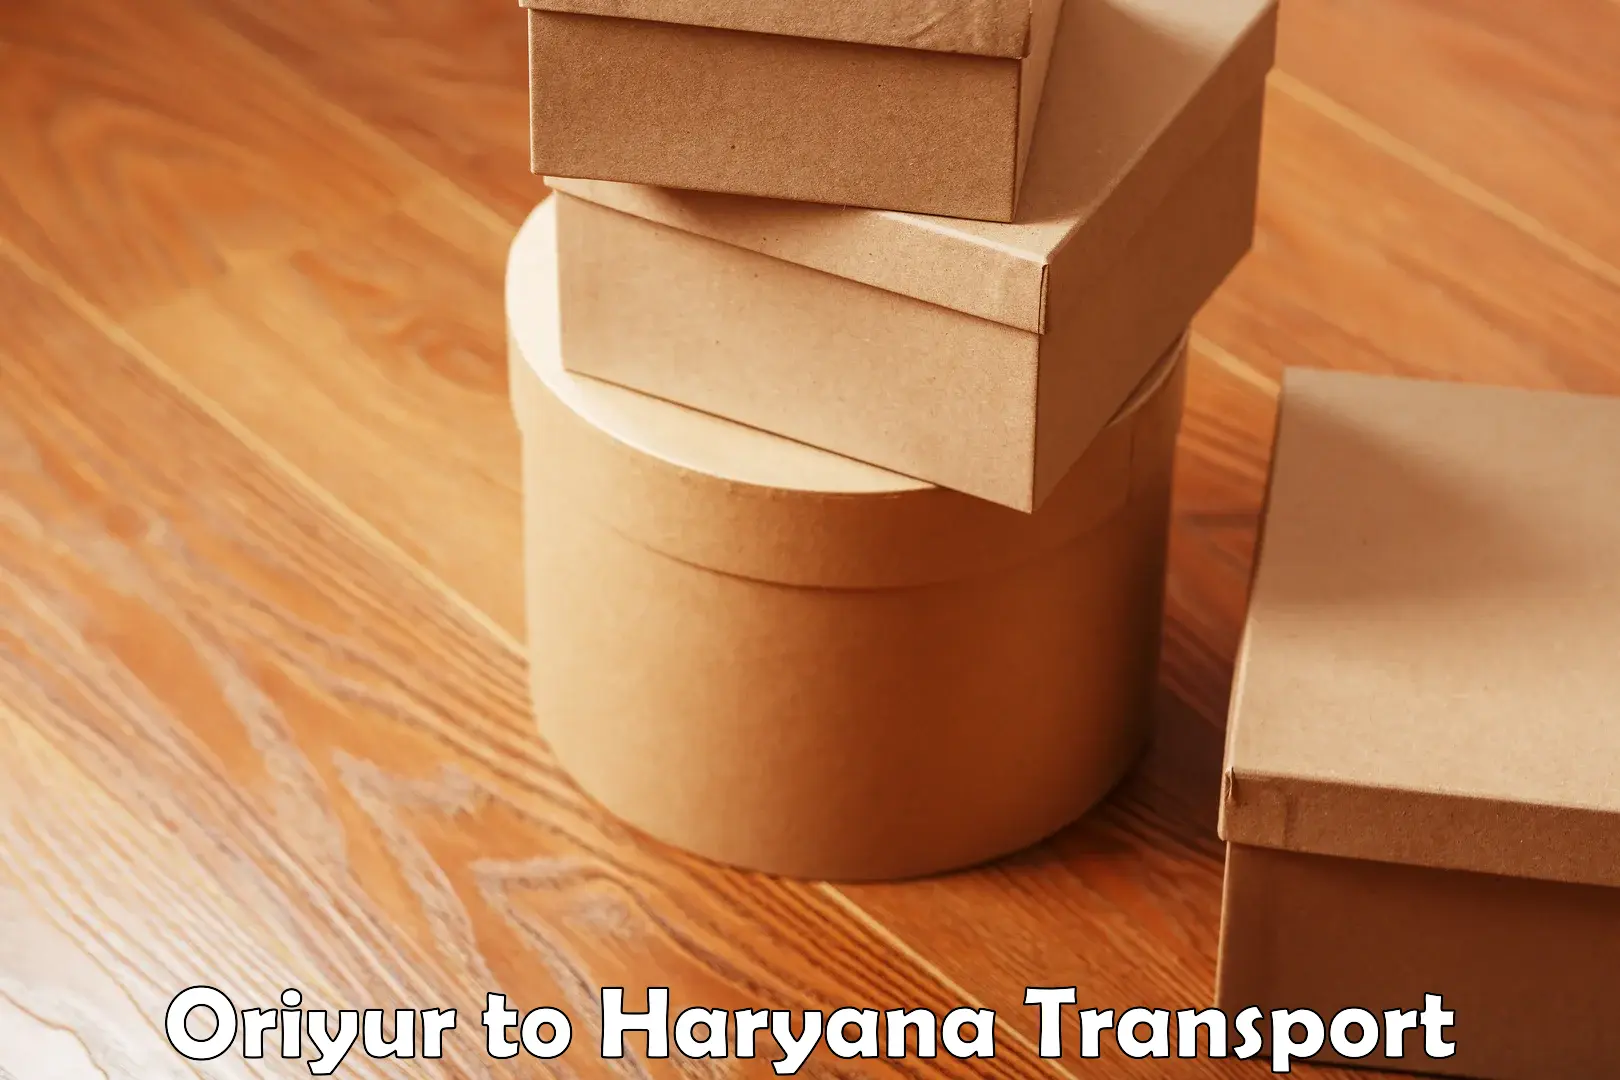 Delivery service Oriyur to Gurugram